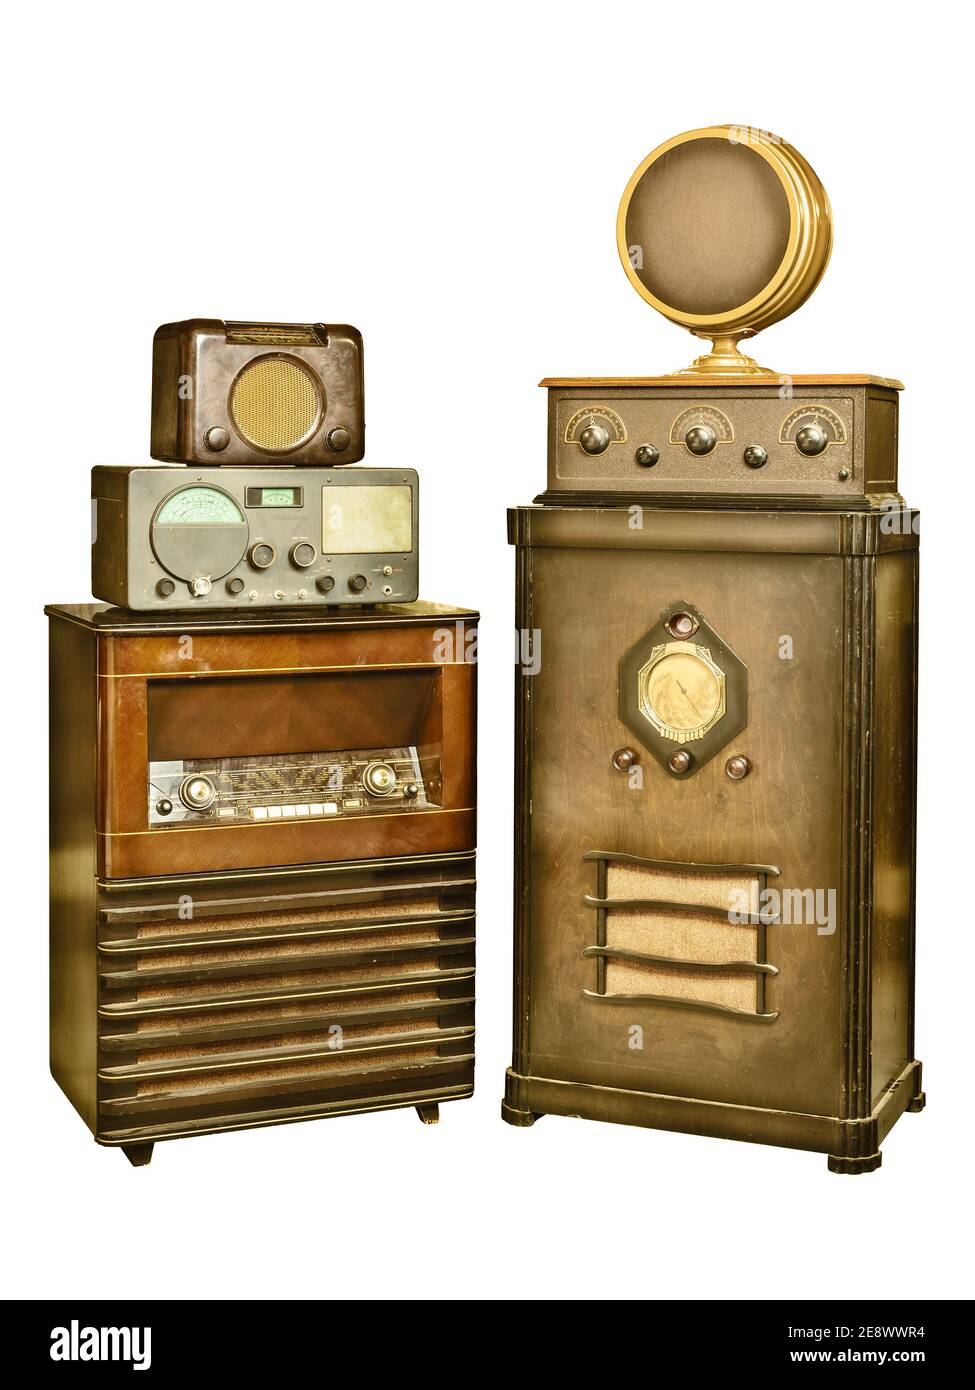 Retro styled image of a set of vintage radio's isolated on a white background Stock Photo